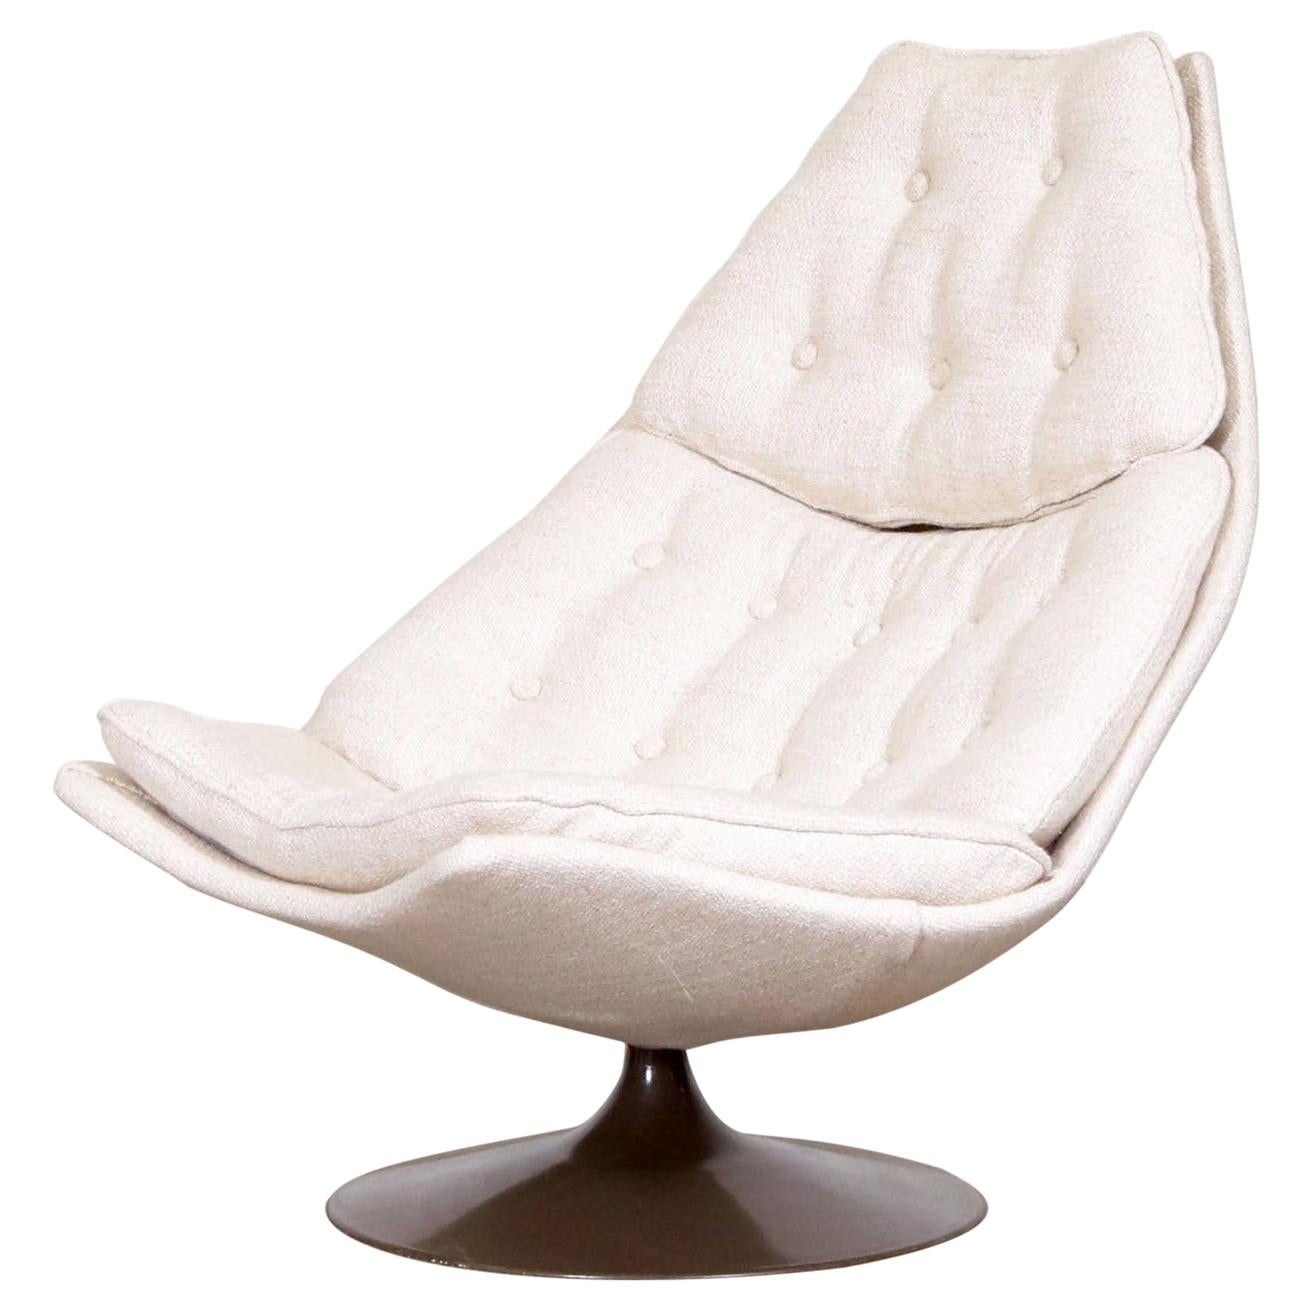 Geoffrey Harcourt 'F588' Swivel Lounge Chair